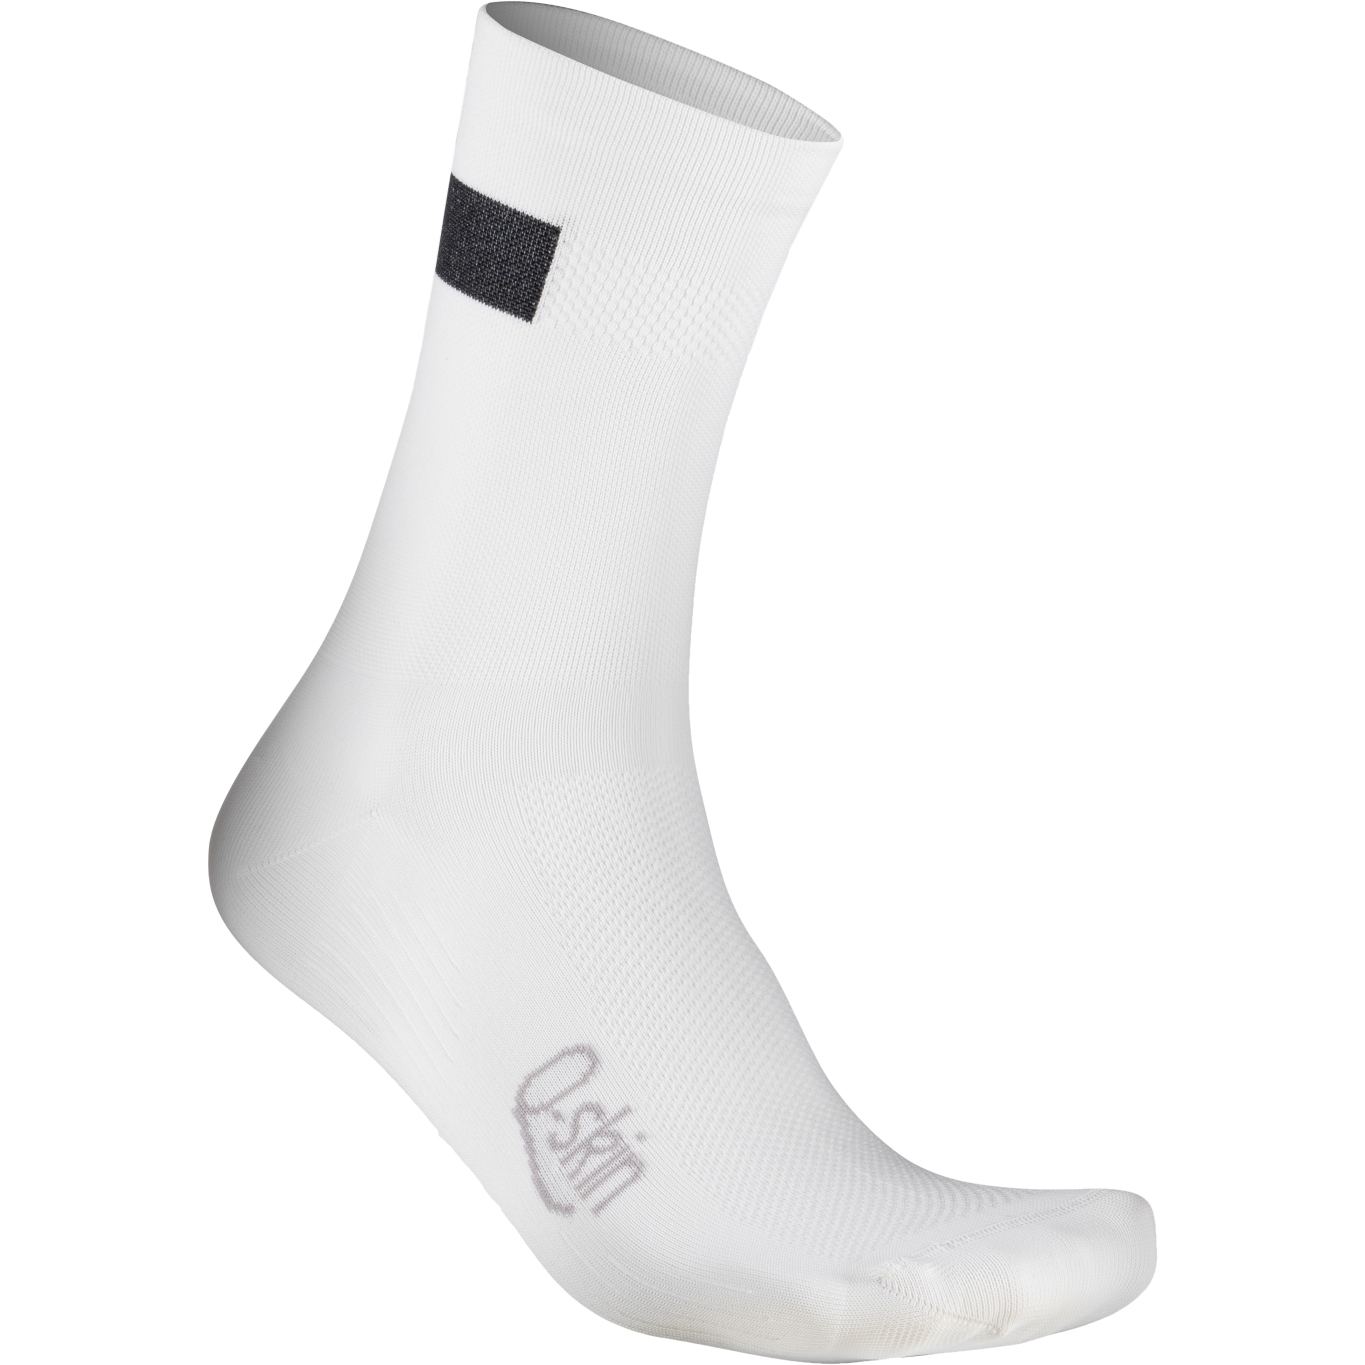 Picture of Sportful Snap Socks Women - 101 White Black